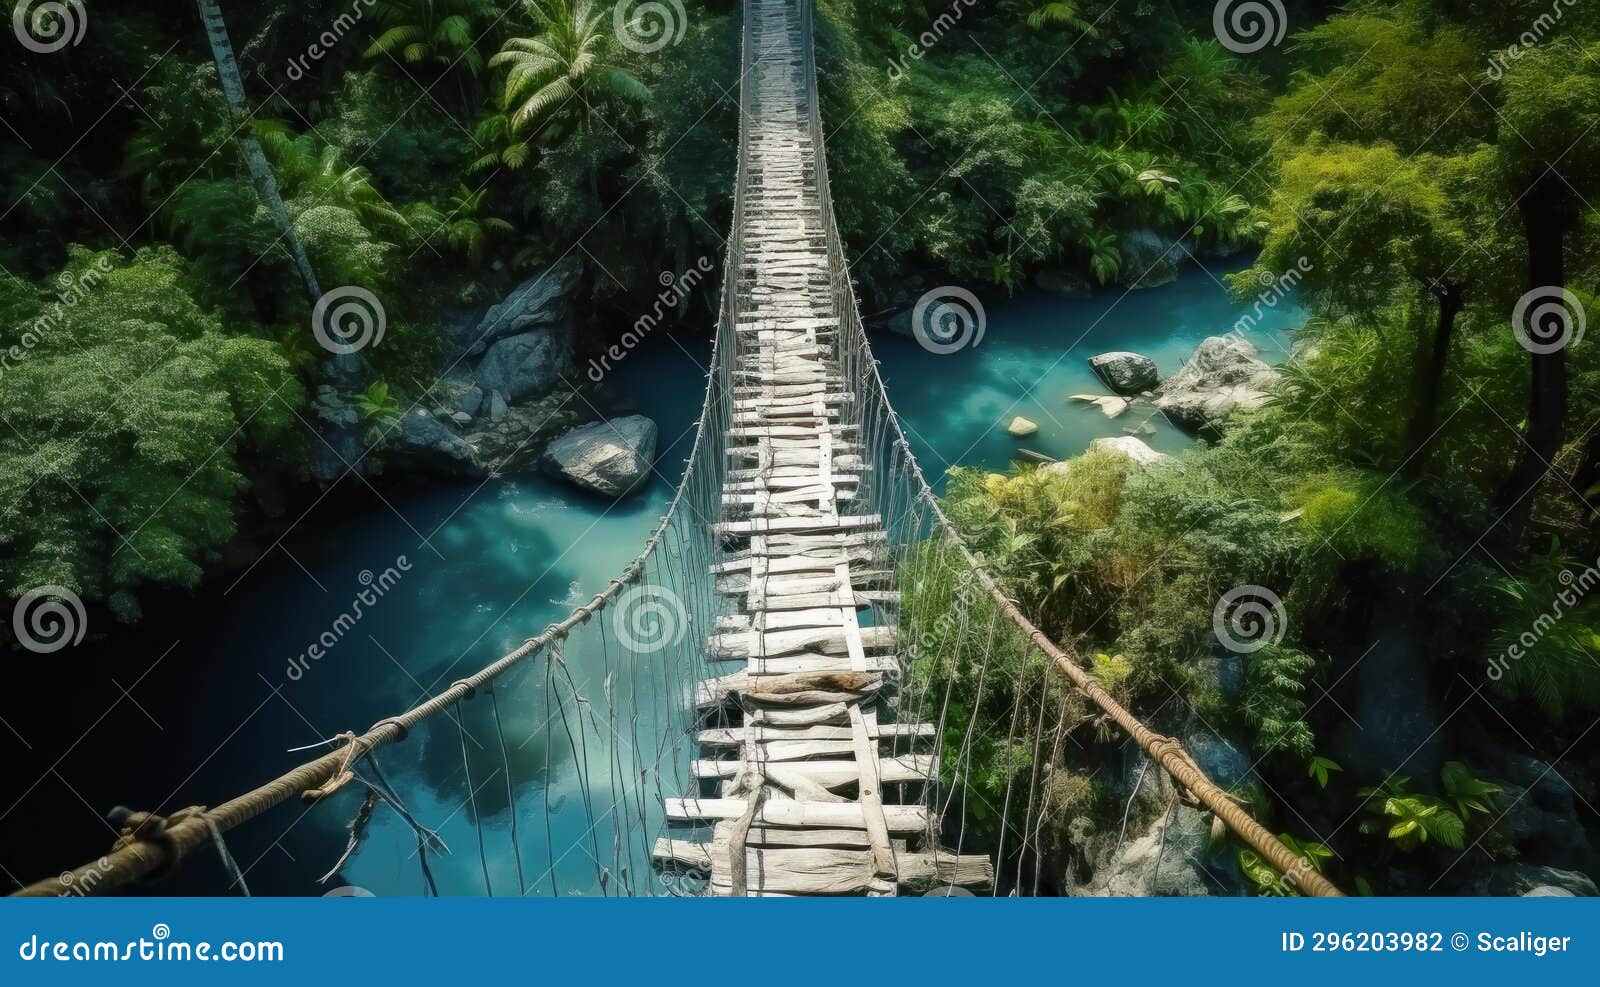 Old Rope Bridge Over Blue River in Jungle, Hanging Wood Footbridge